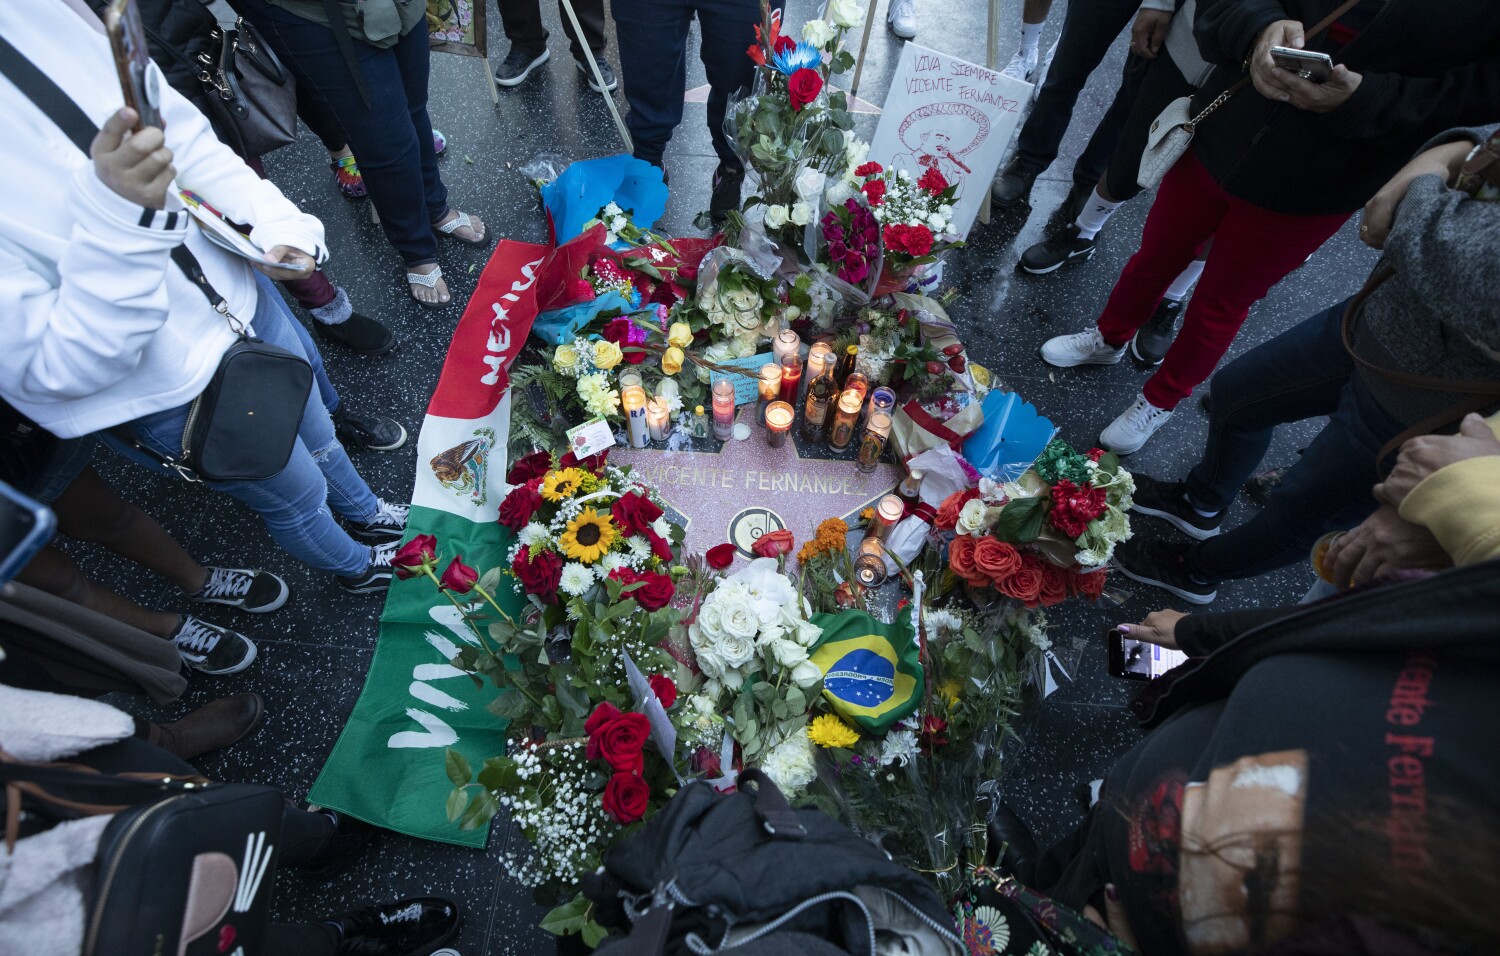 Across Los Angeles, fans mourned Vicente Fernández 